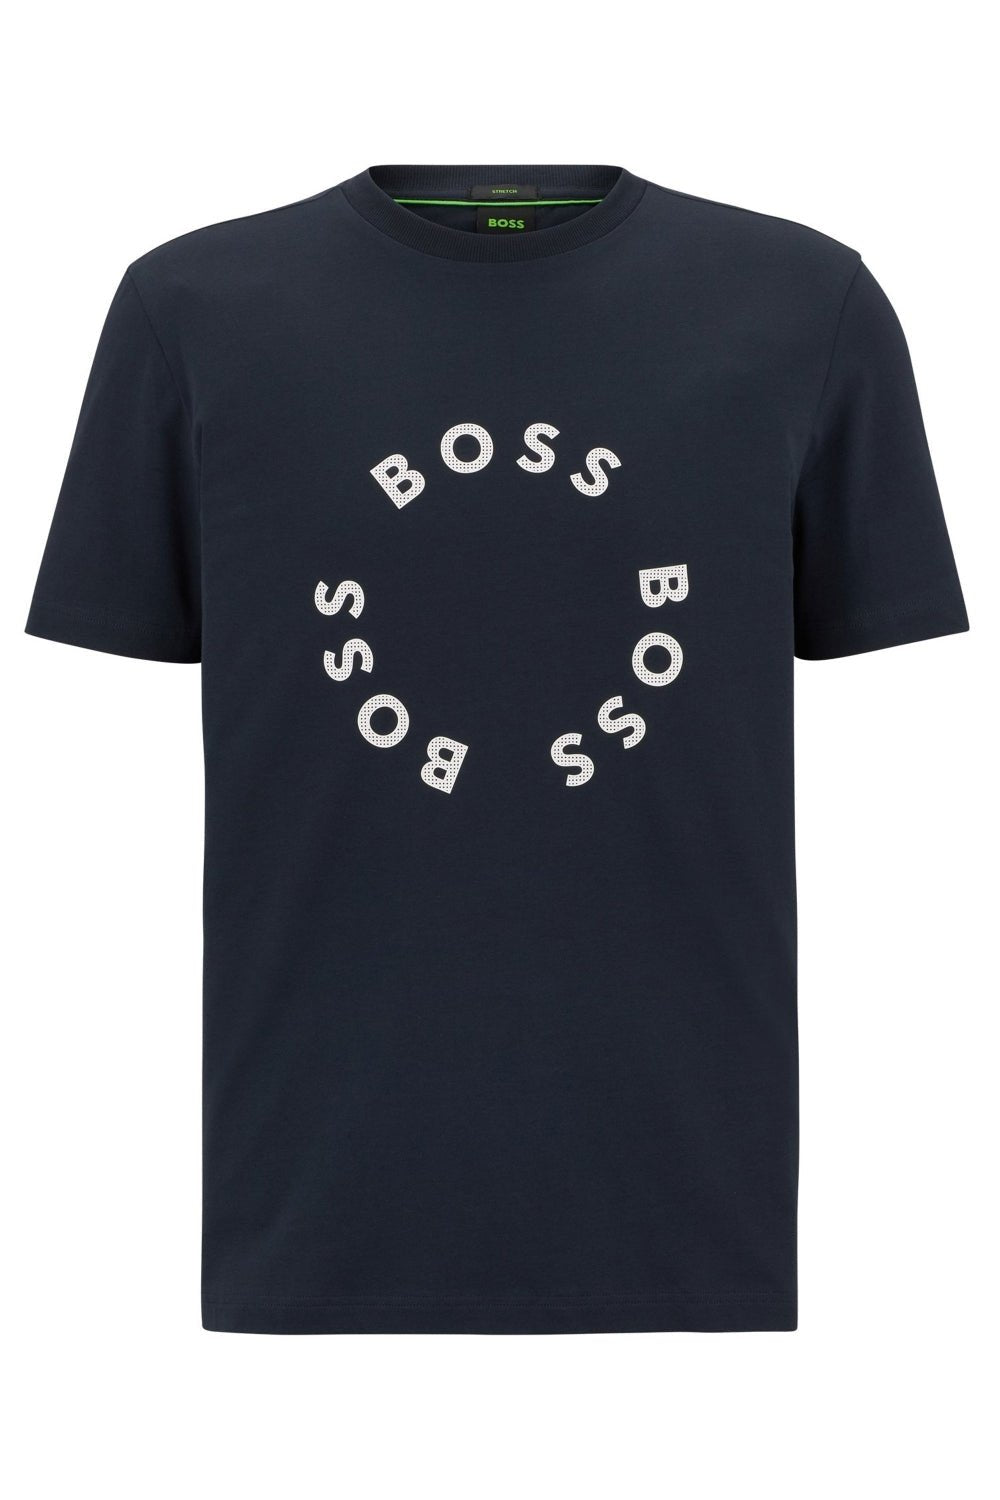 BOSS Green Tee 4 T-Shirt - 402 Dark Blue - Escape Menswear